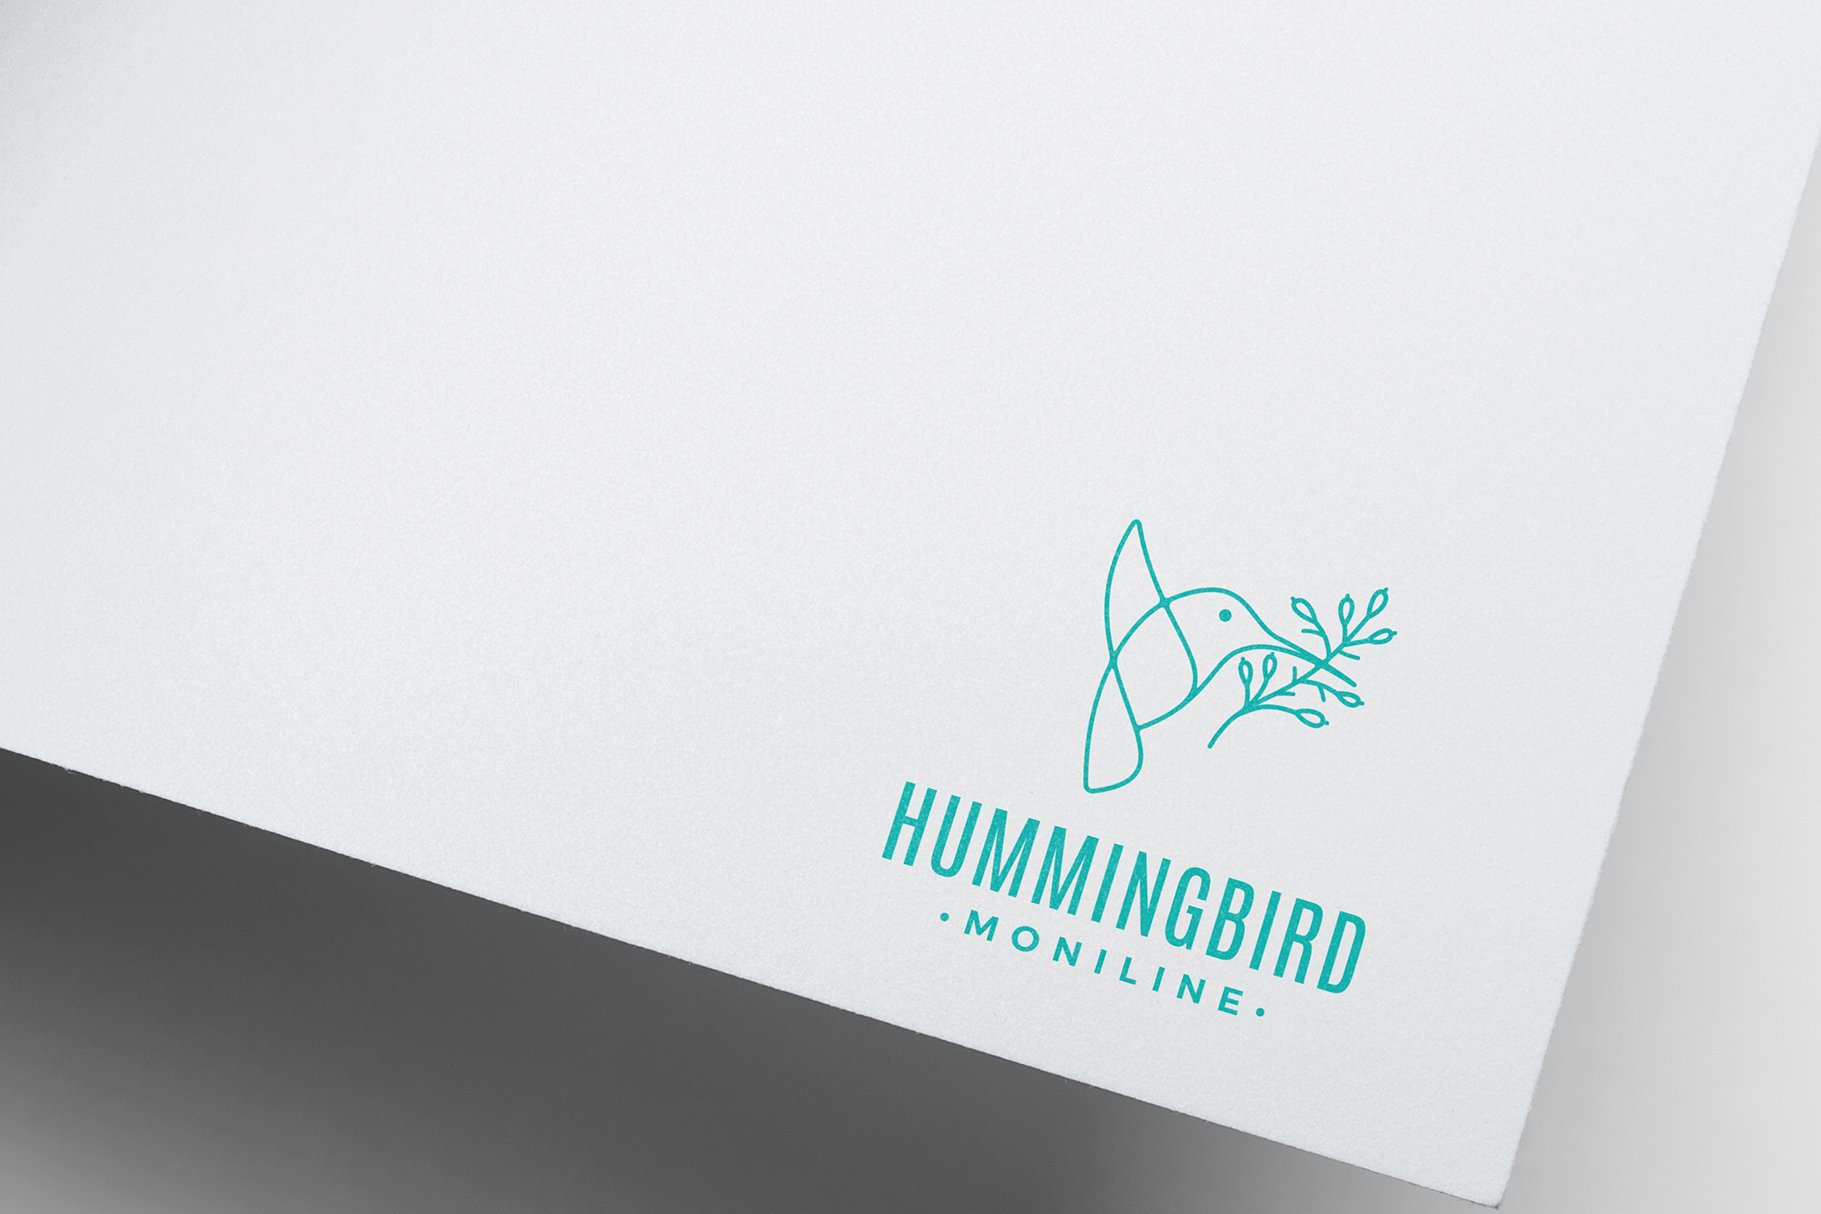 Hummingbird Monolone preview image.